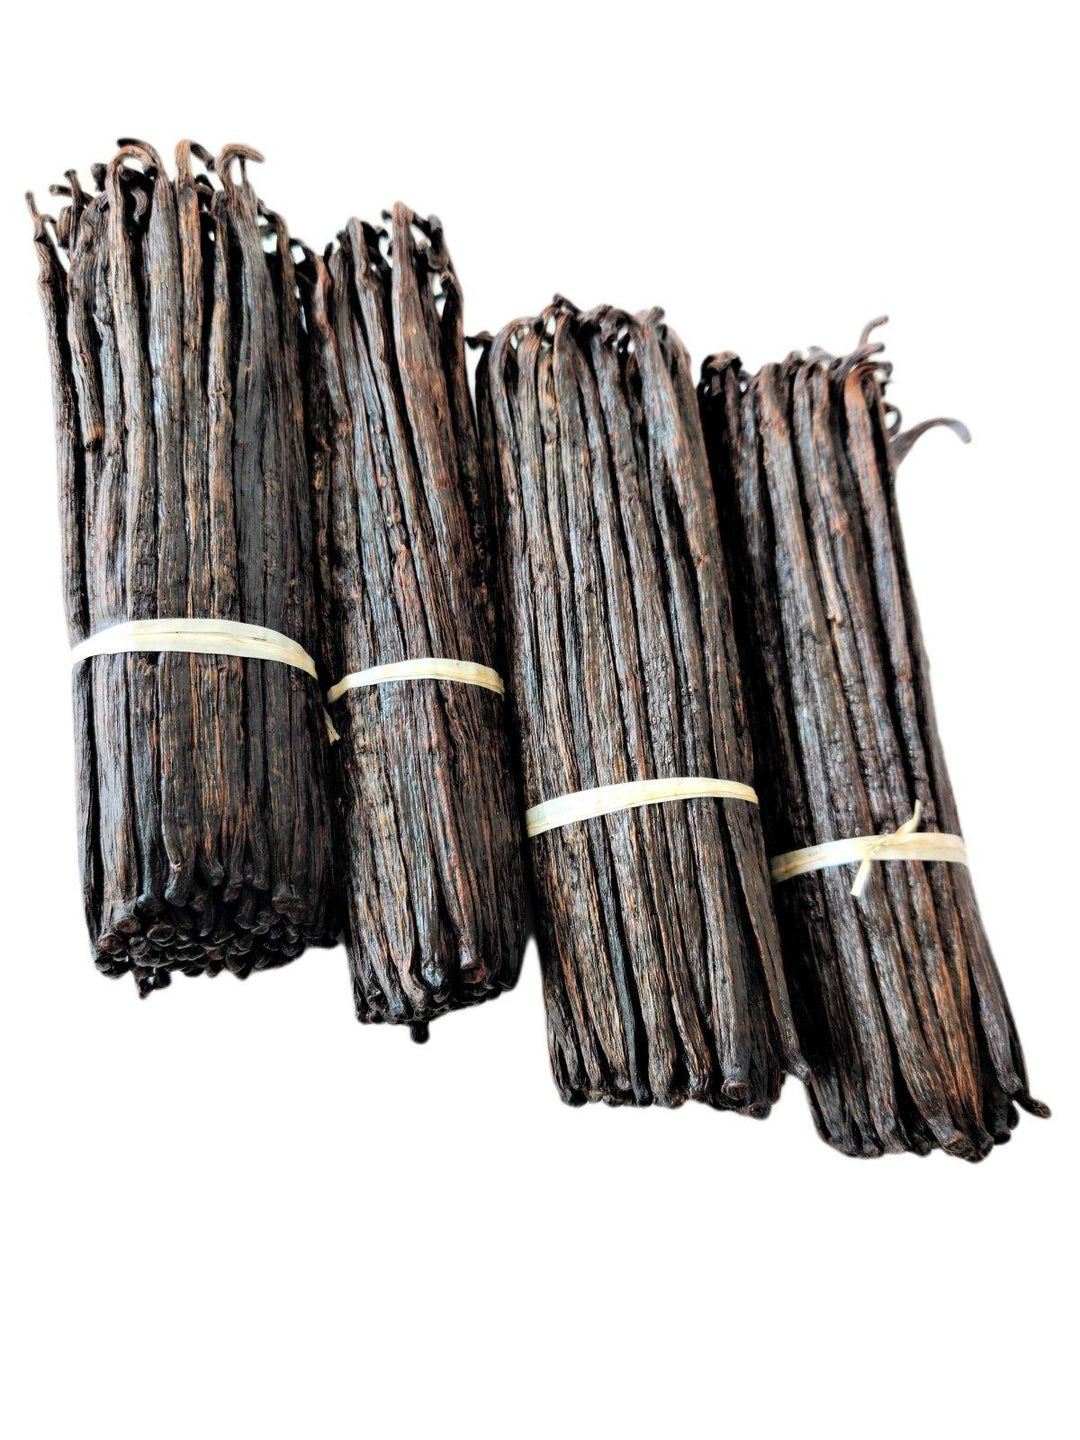 Madagascar Bourbon Extract Vanilla Beans Grade-B <br>For Extract Making<BR>1/4 lb, 1/2 lb, 1 lb, 2 lb